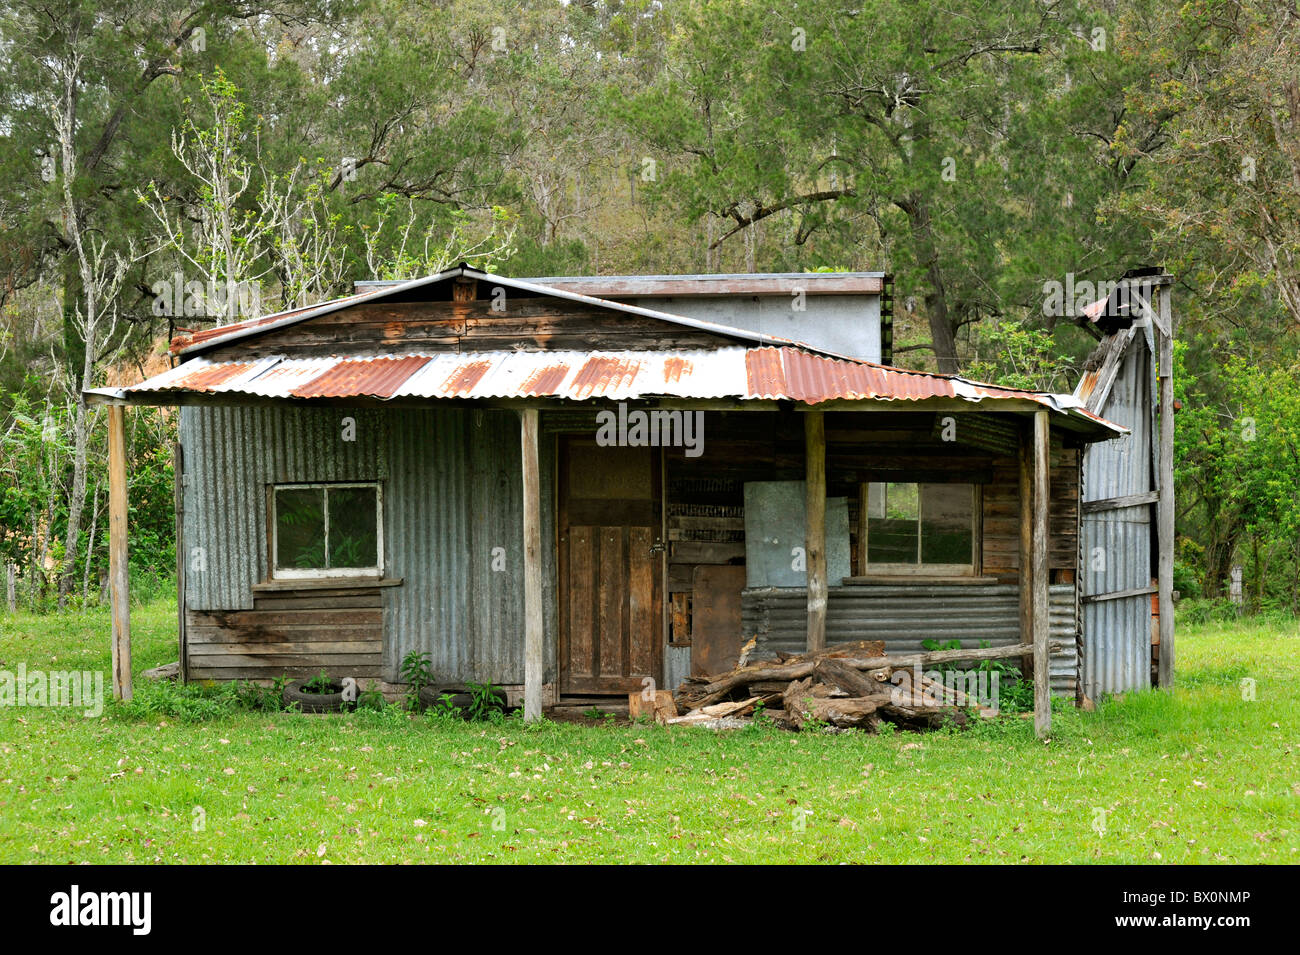 Wellblech-Busch-Hütte in Australien Stockfoto